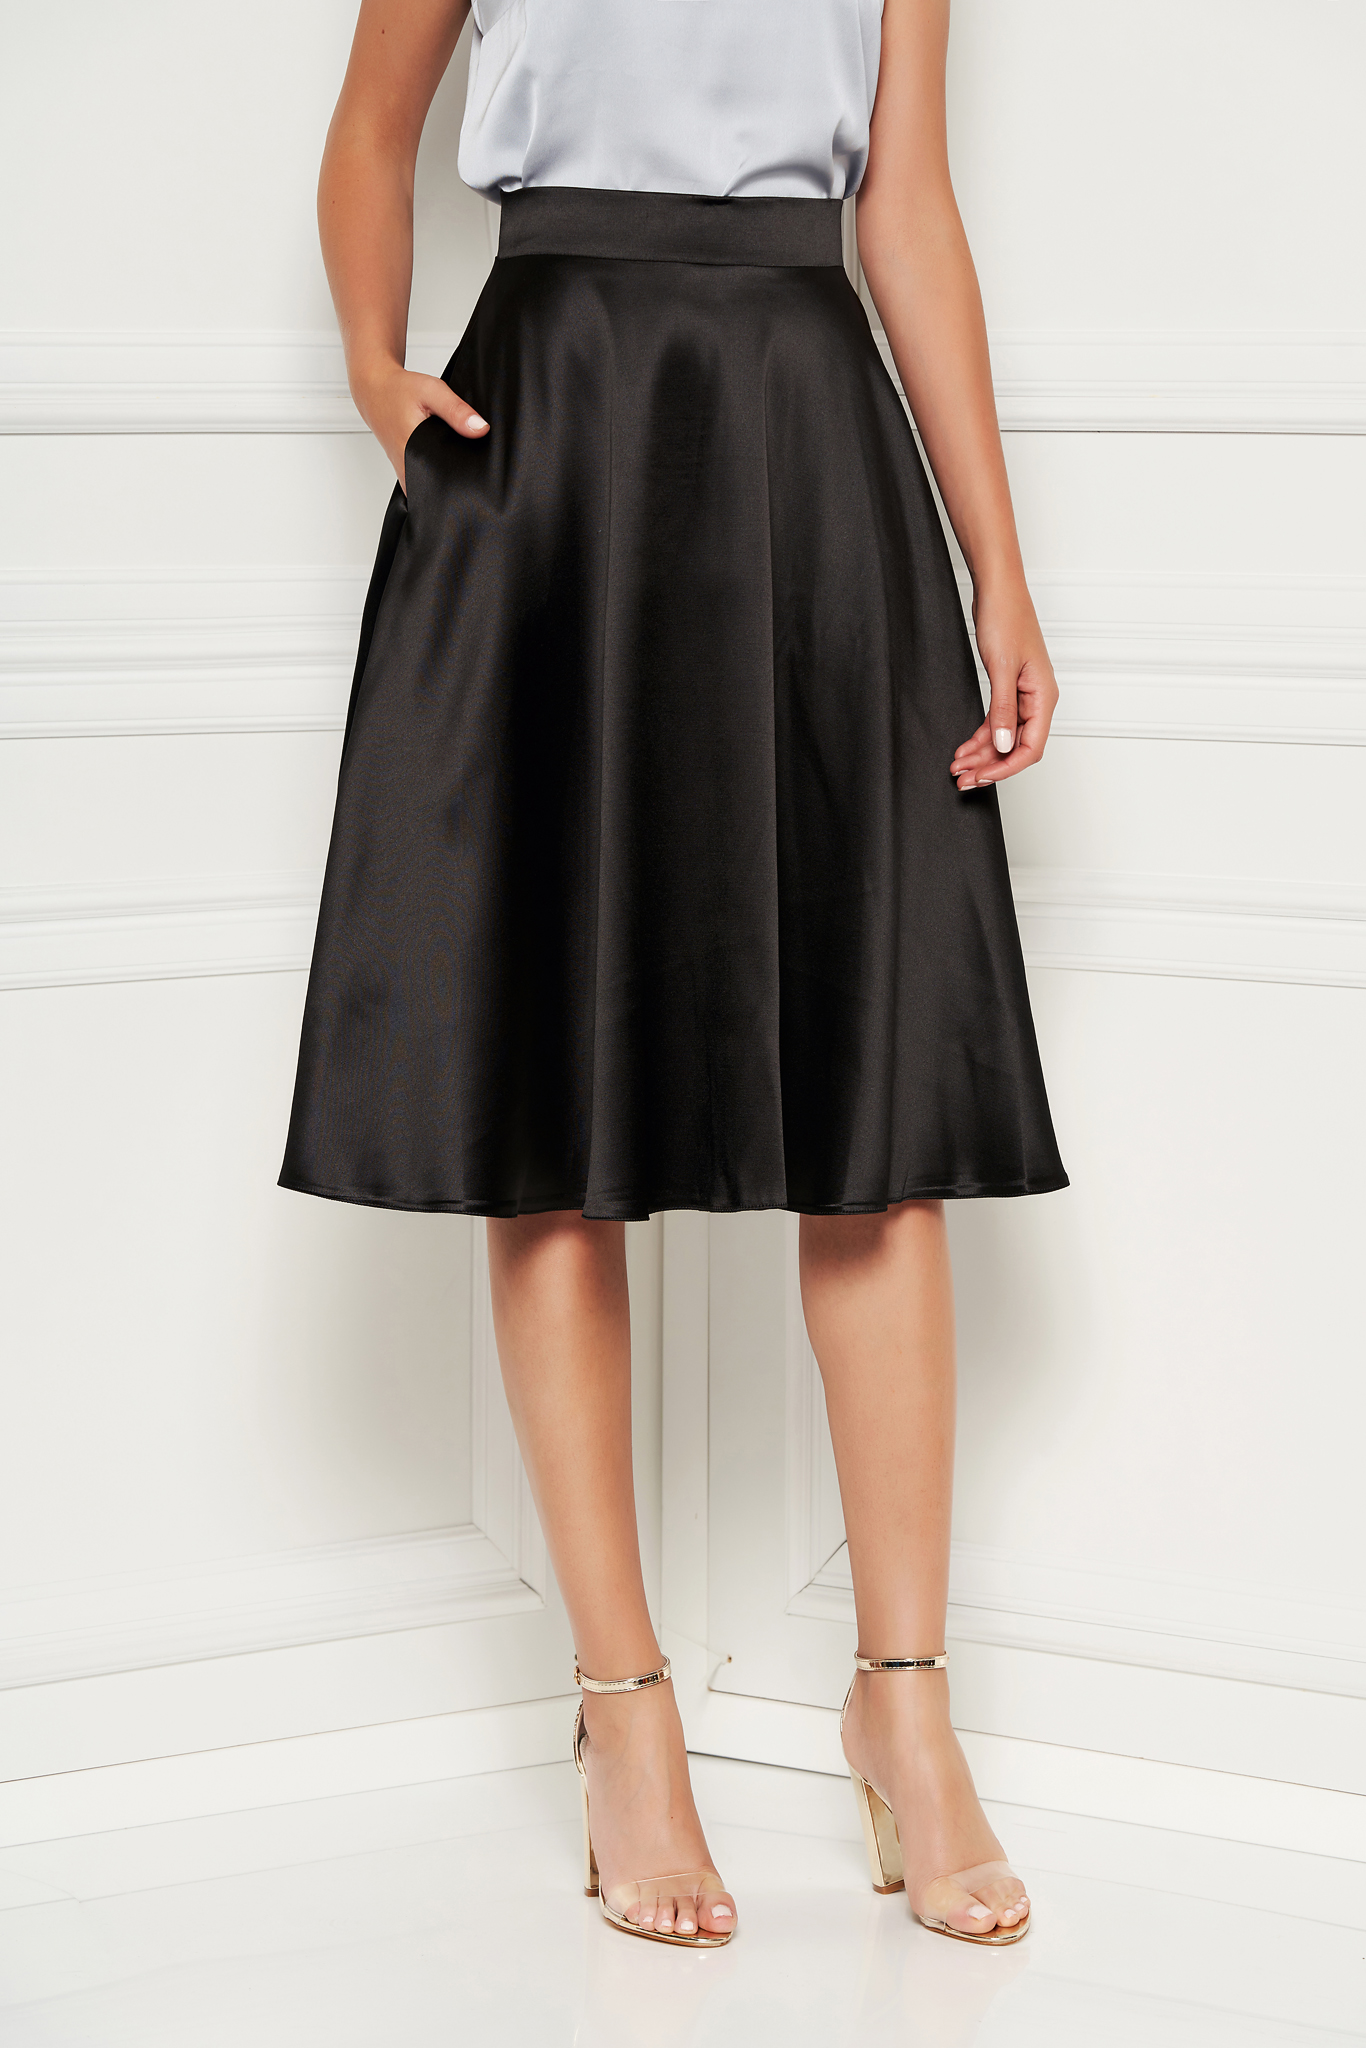 Starshiners Black Elegant High Waisted Cloche Skirt From Satin 6202